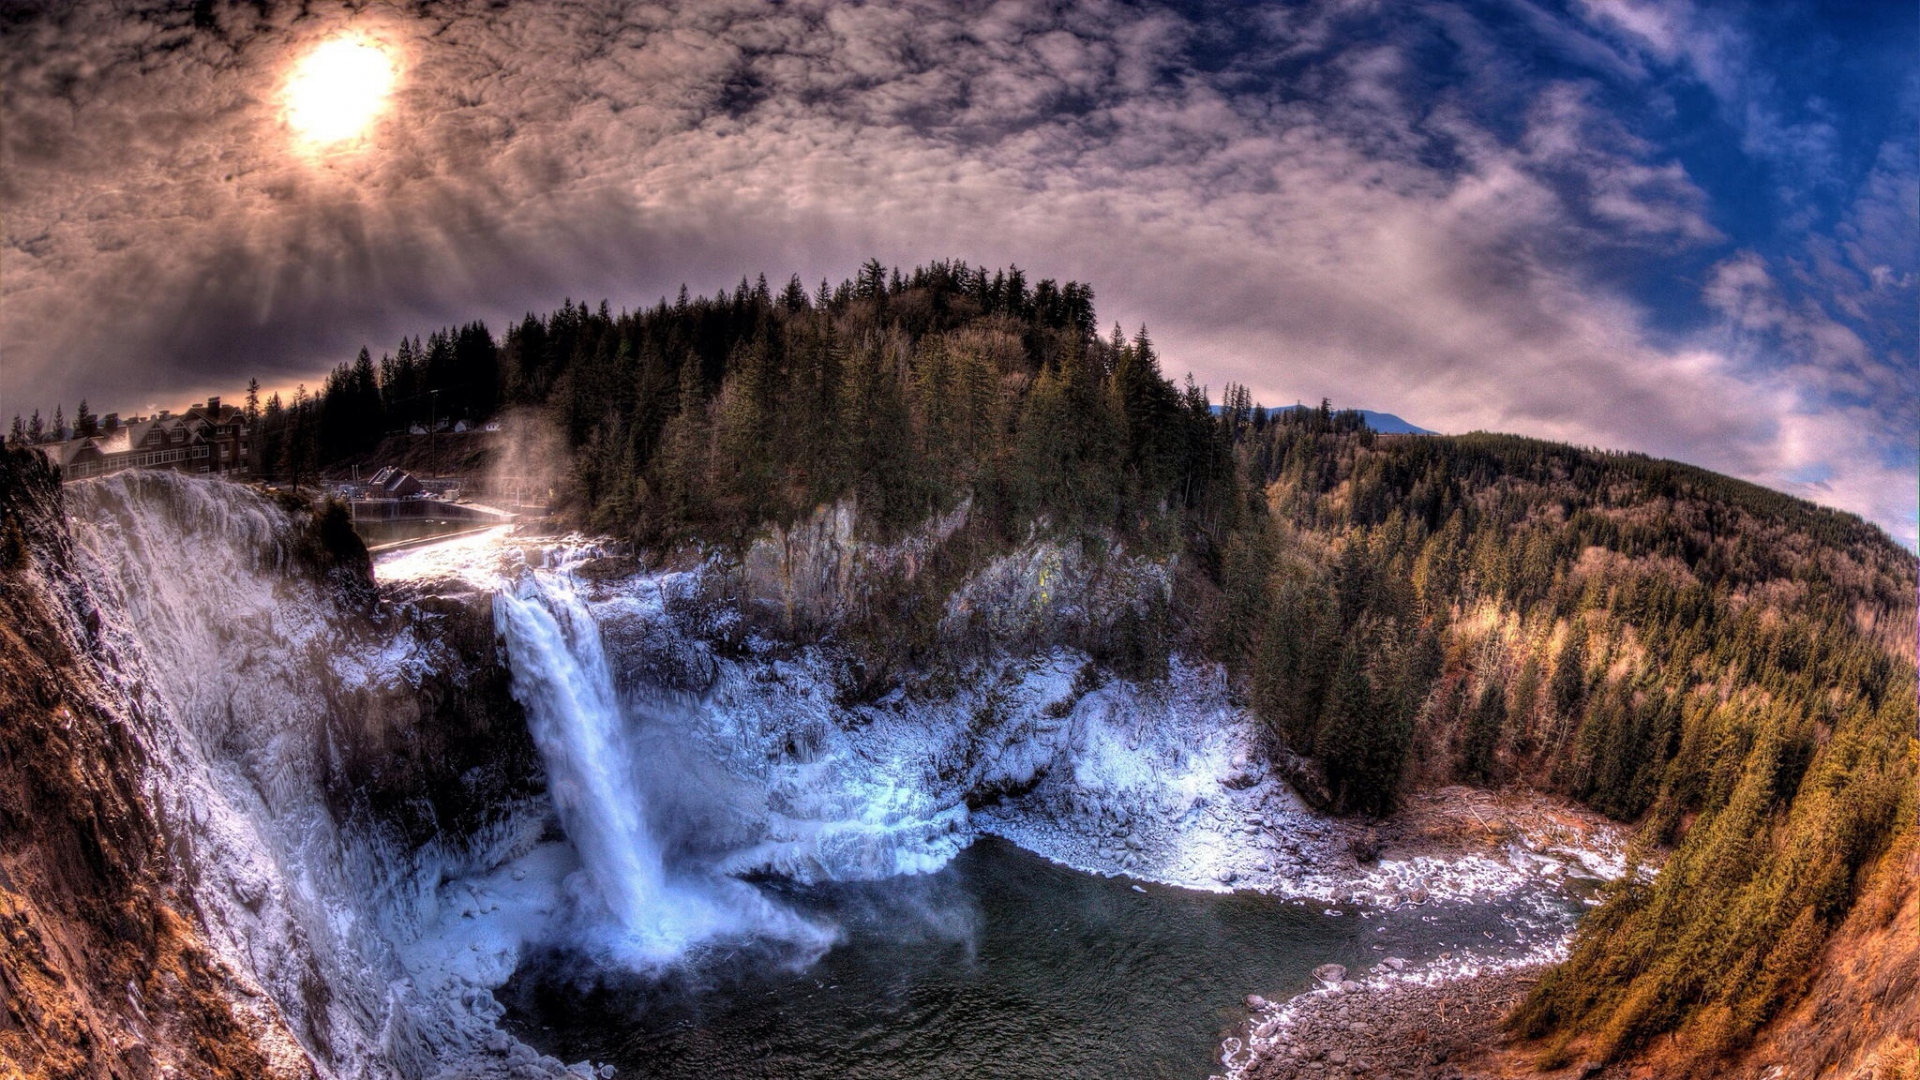 Wallpaper Waterfall Mainly Cloudy Fir-tree Forest Landscape - Snoqualmie Falls - HD Wallpaper 